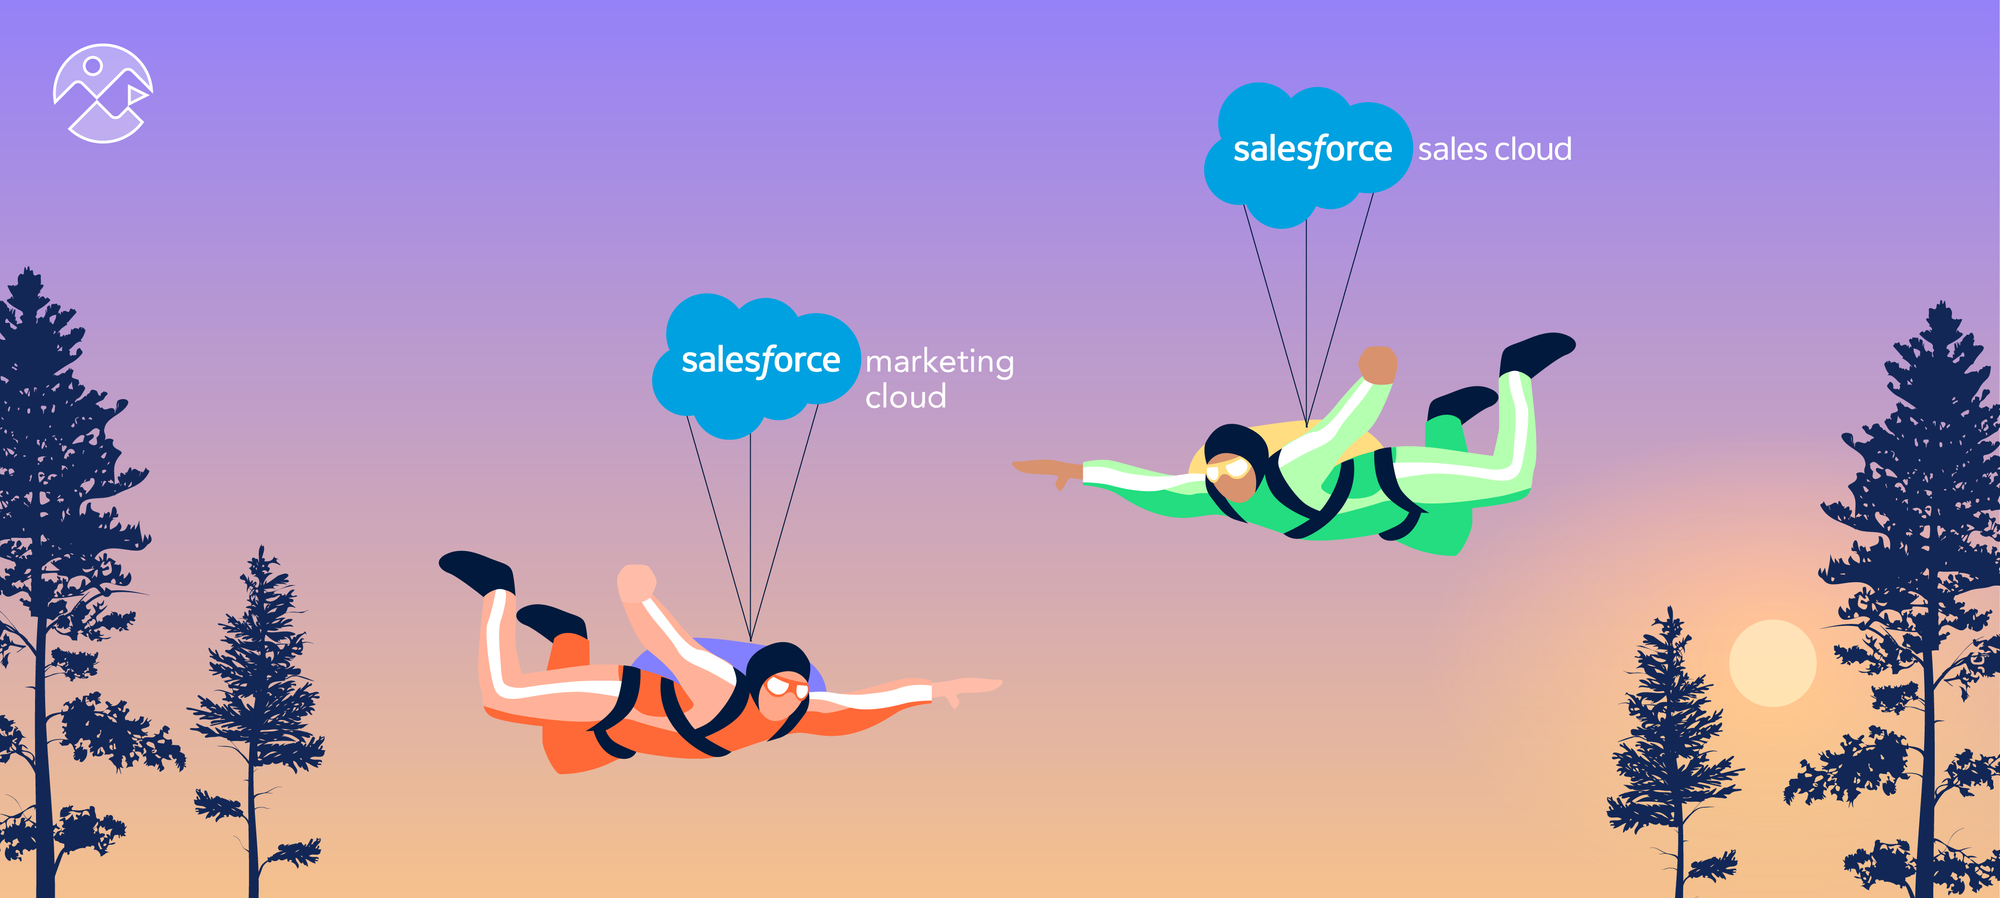 Salesforce Sales Cloud vs Salesforce Marketing Cloud